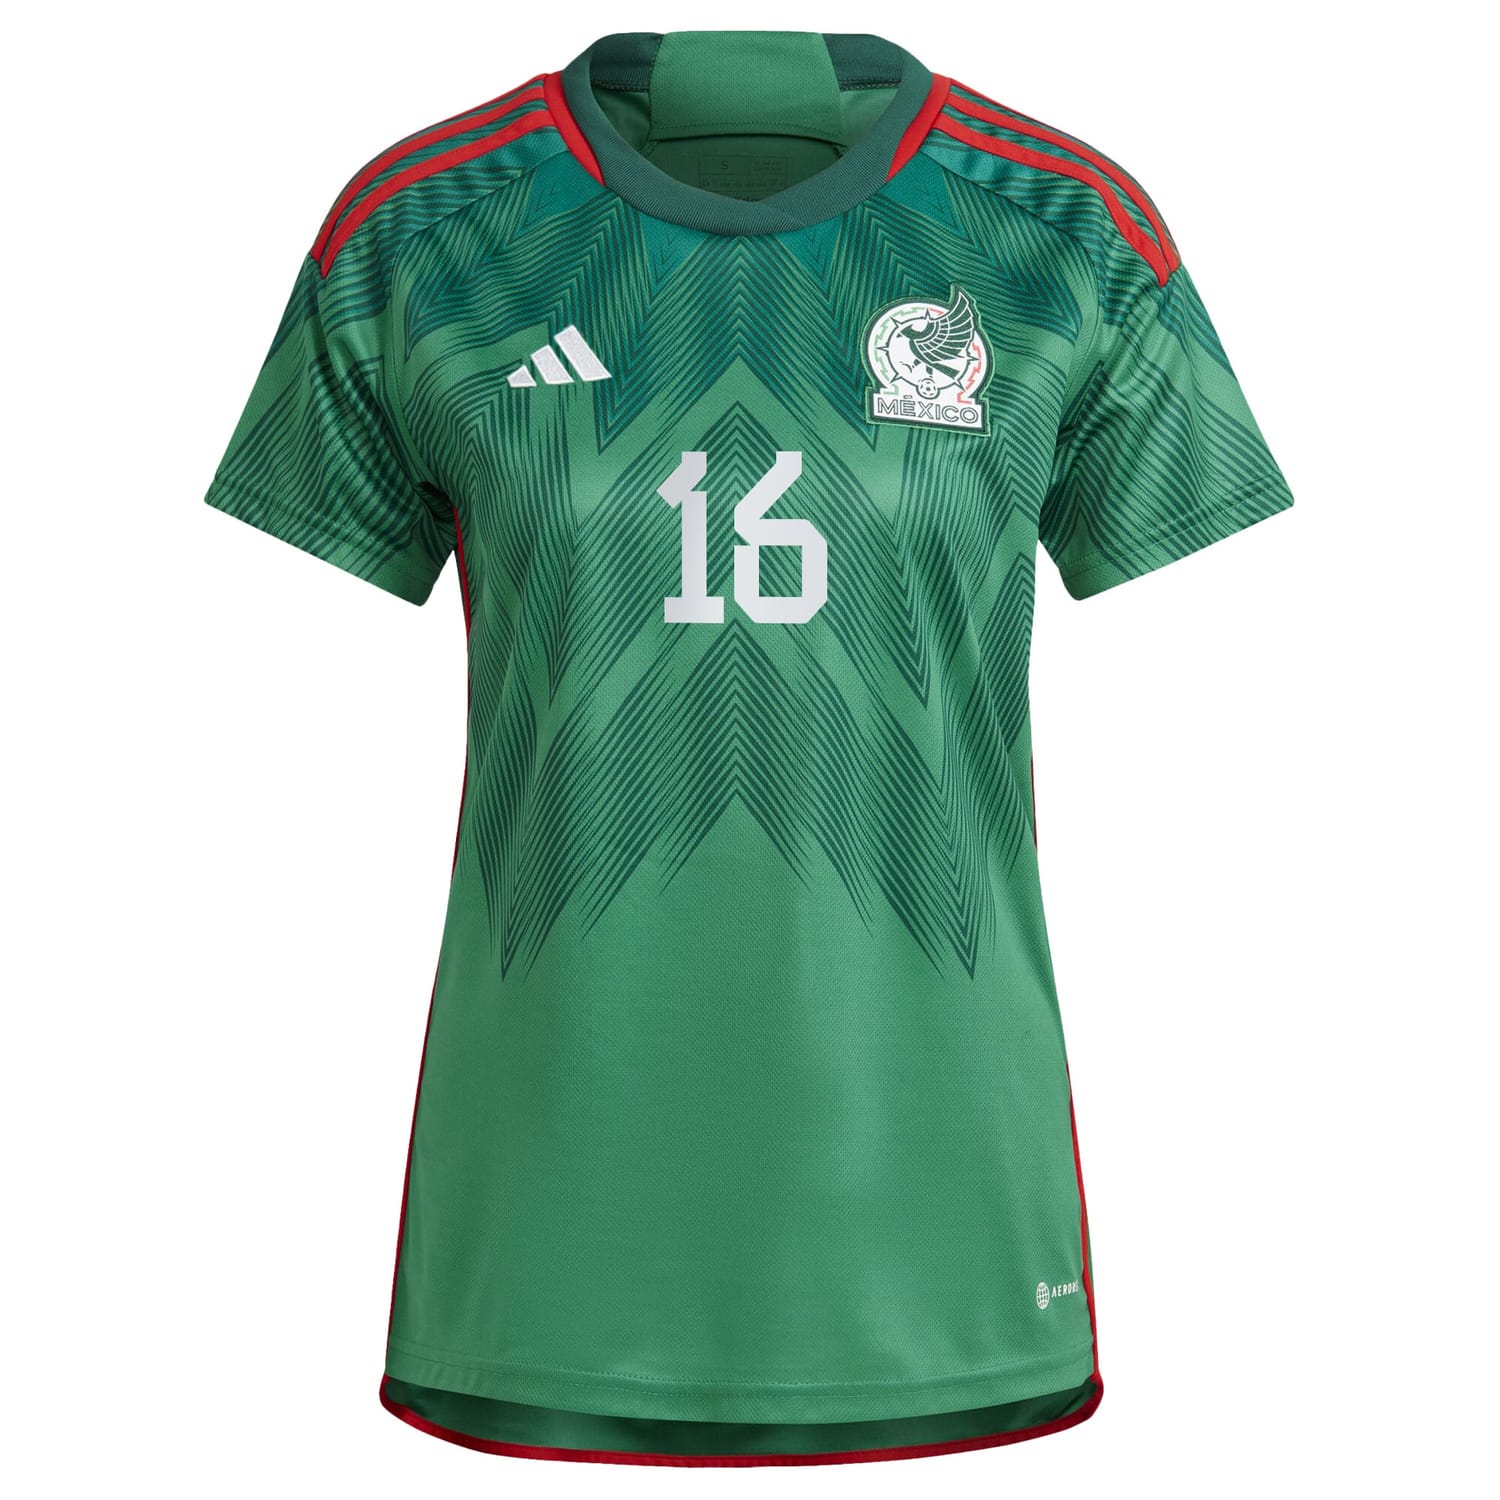 Mexico National Team Home Jersey Shirt Green 2022-23 player Héctor Herrera printing for Women